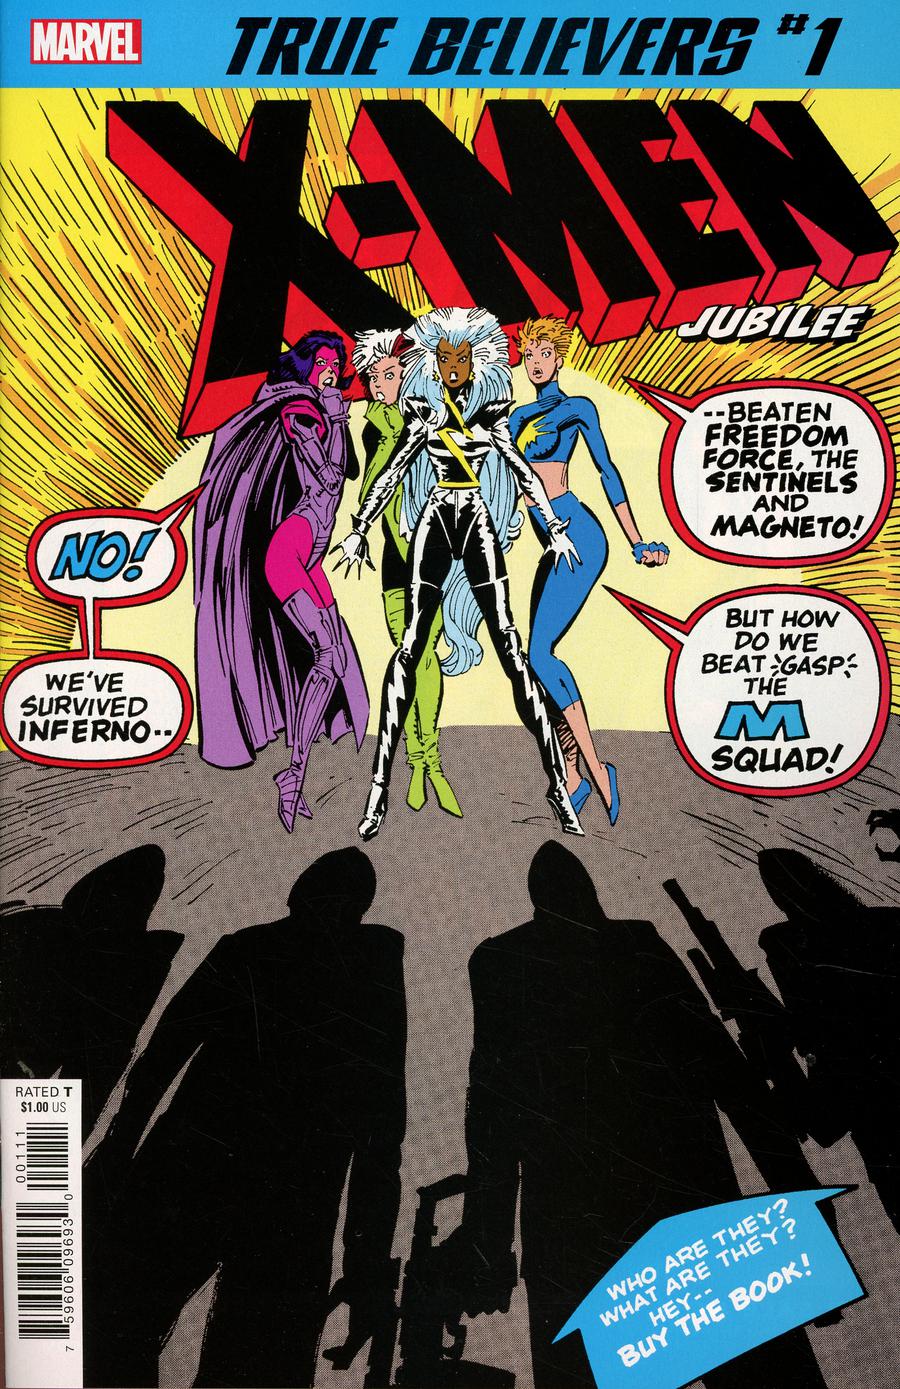 True Believers X-Men Jubilee #1 Cover A Regular Cover